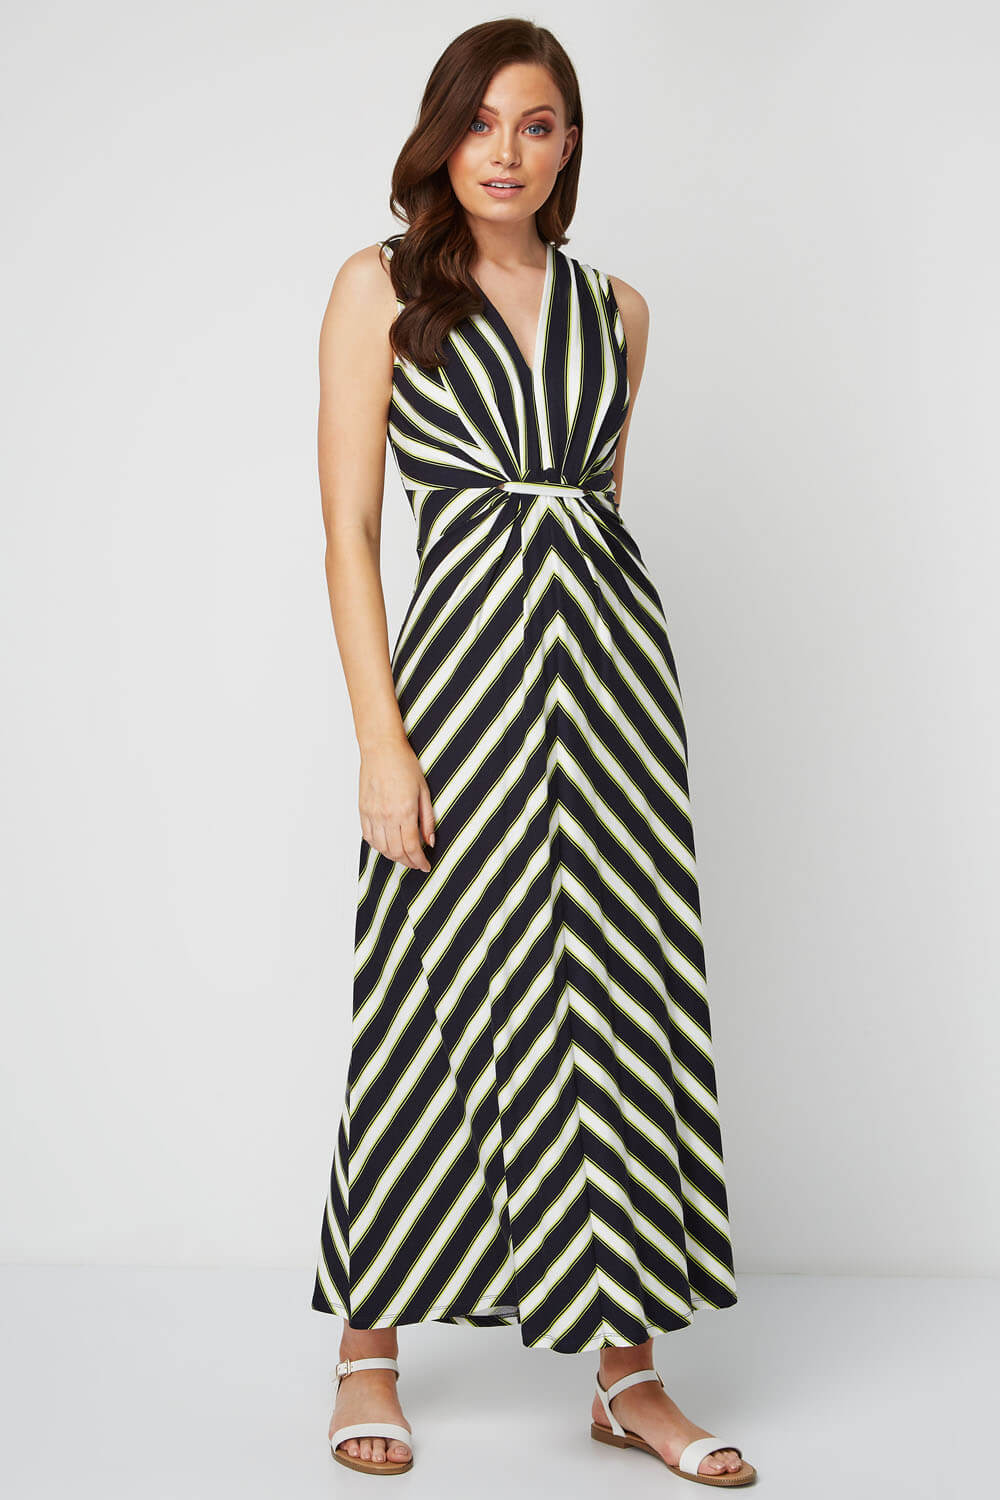 Chevron Stripe Maxi Dress